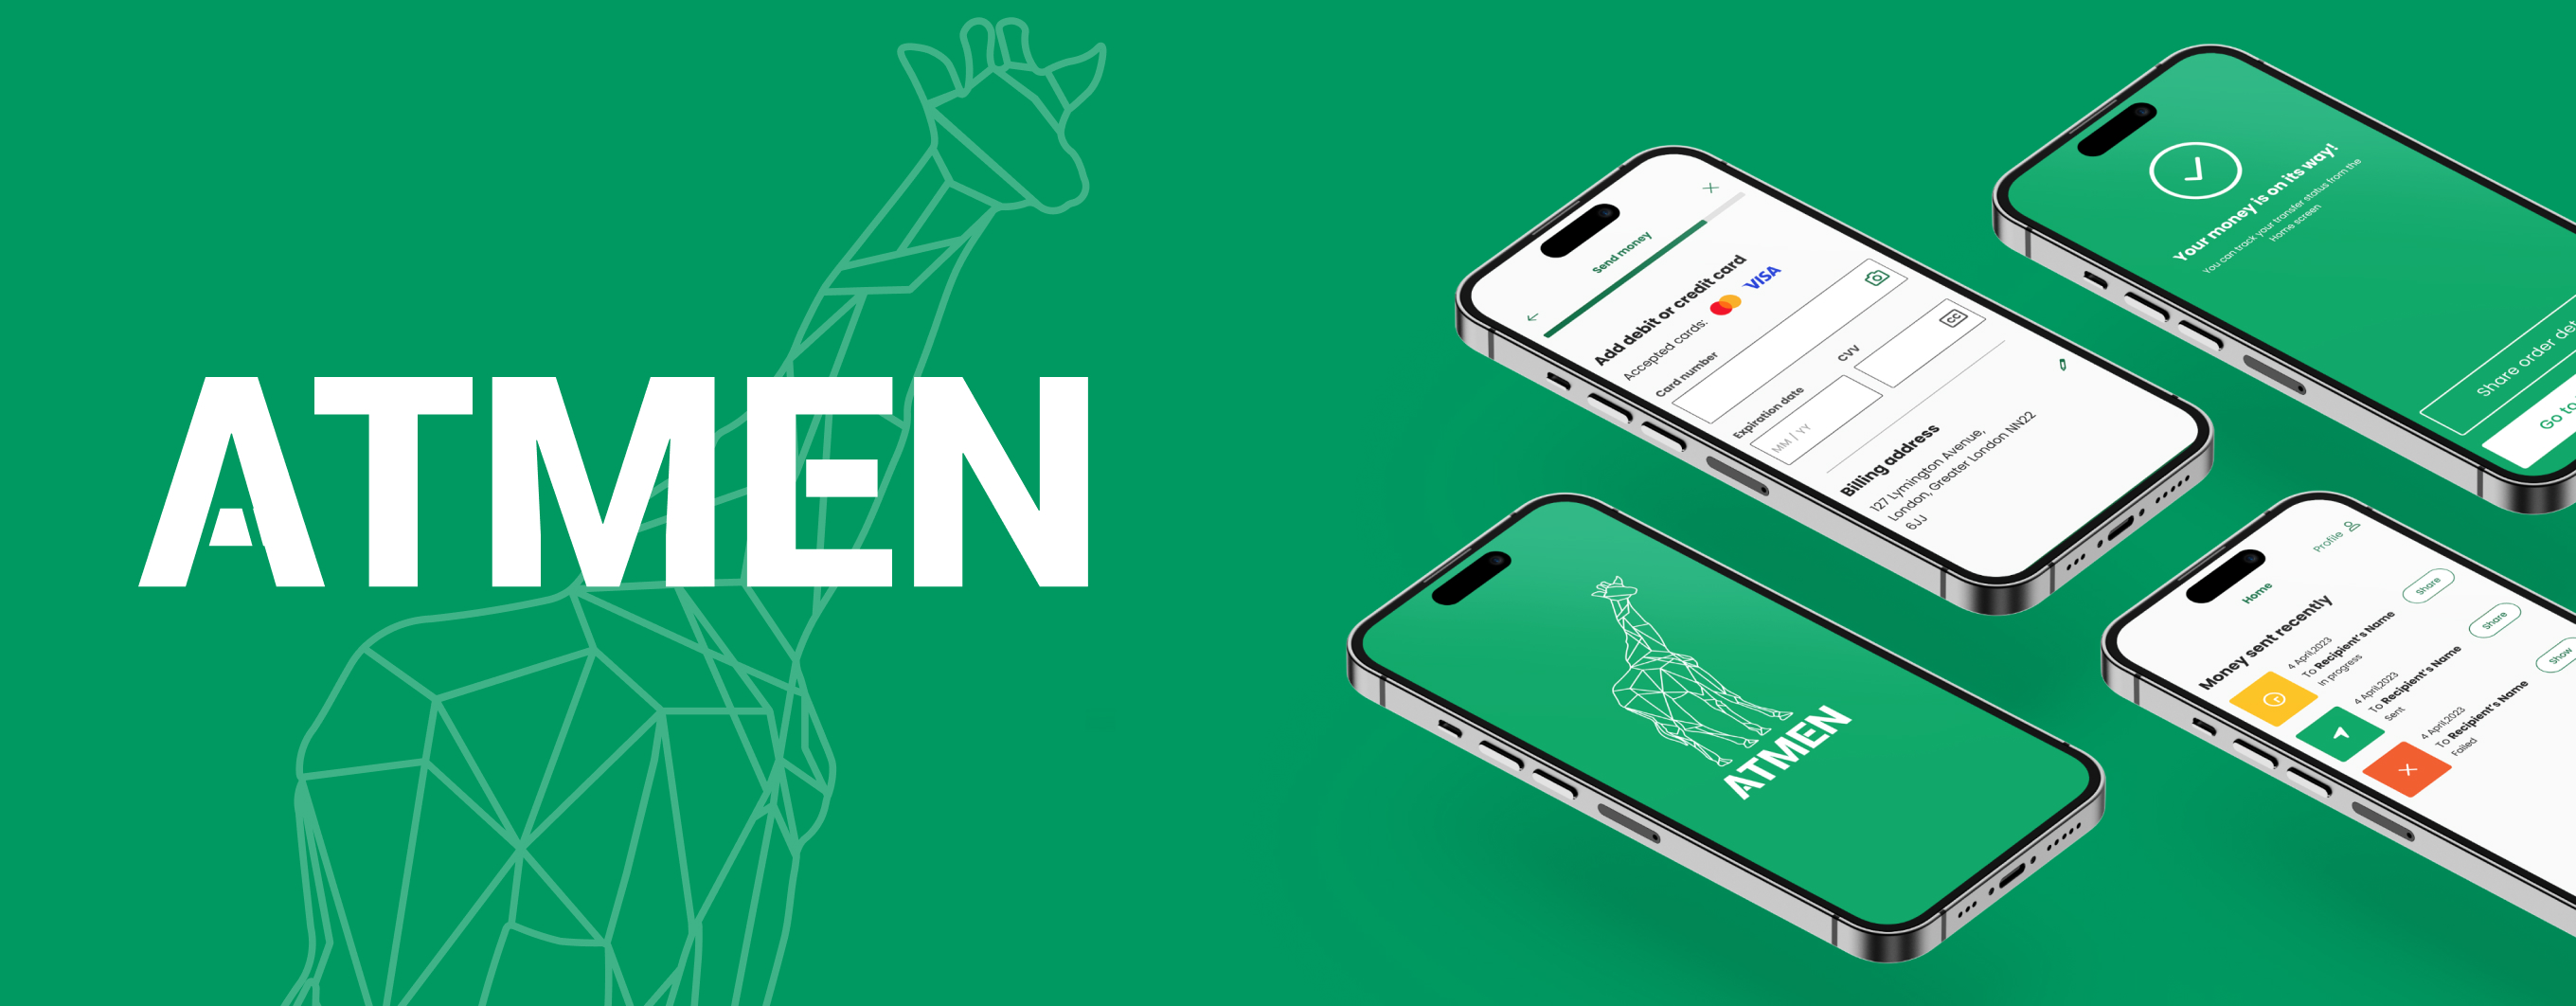 Atmen Fintech Mobile App